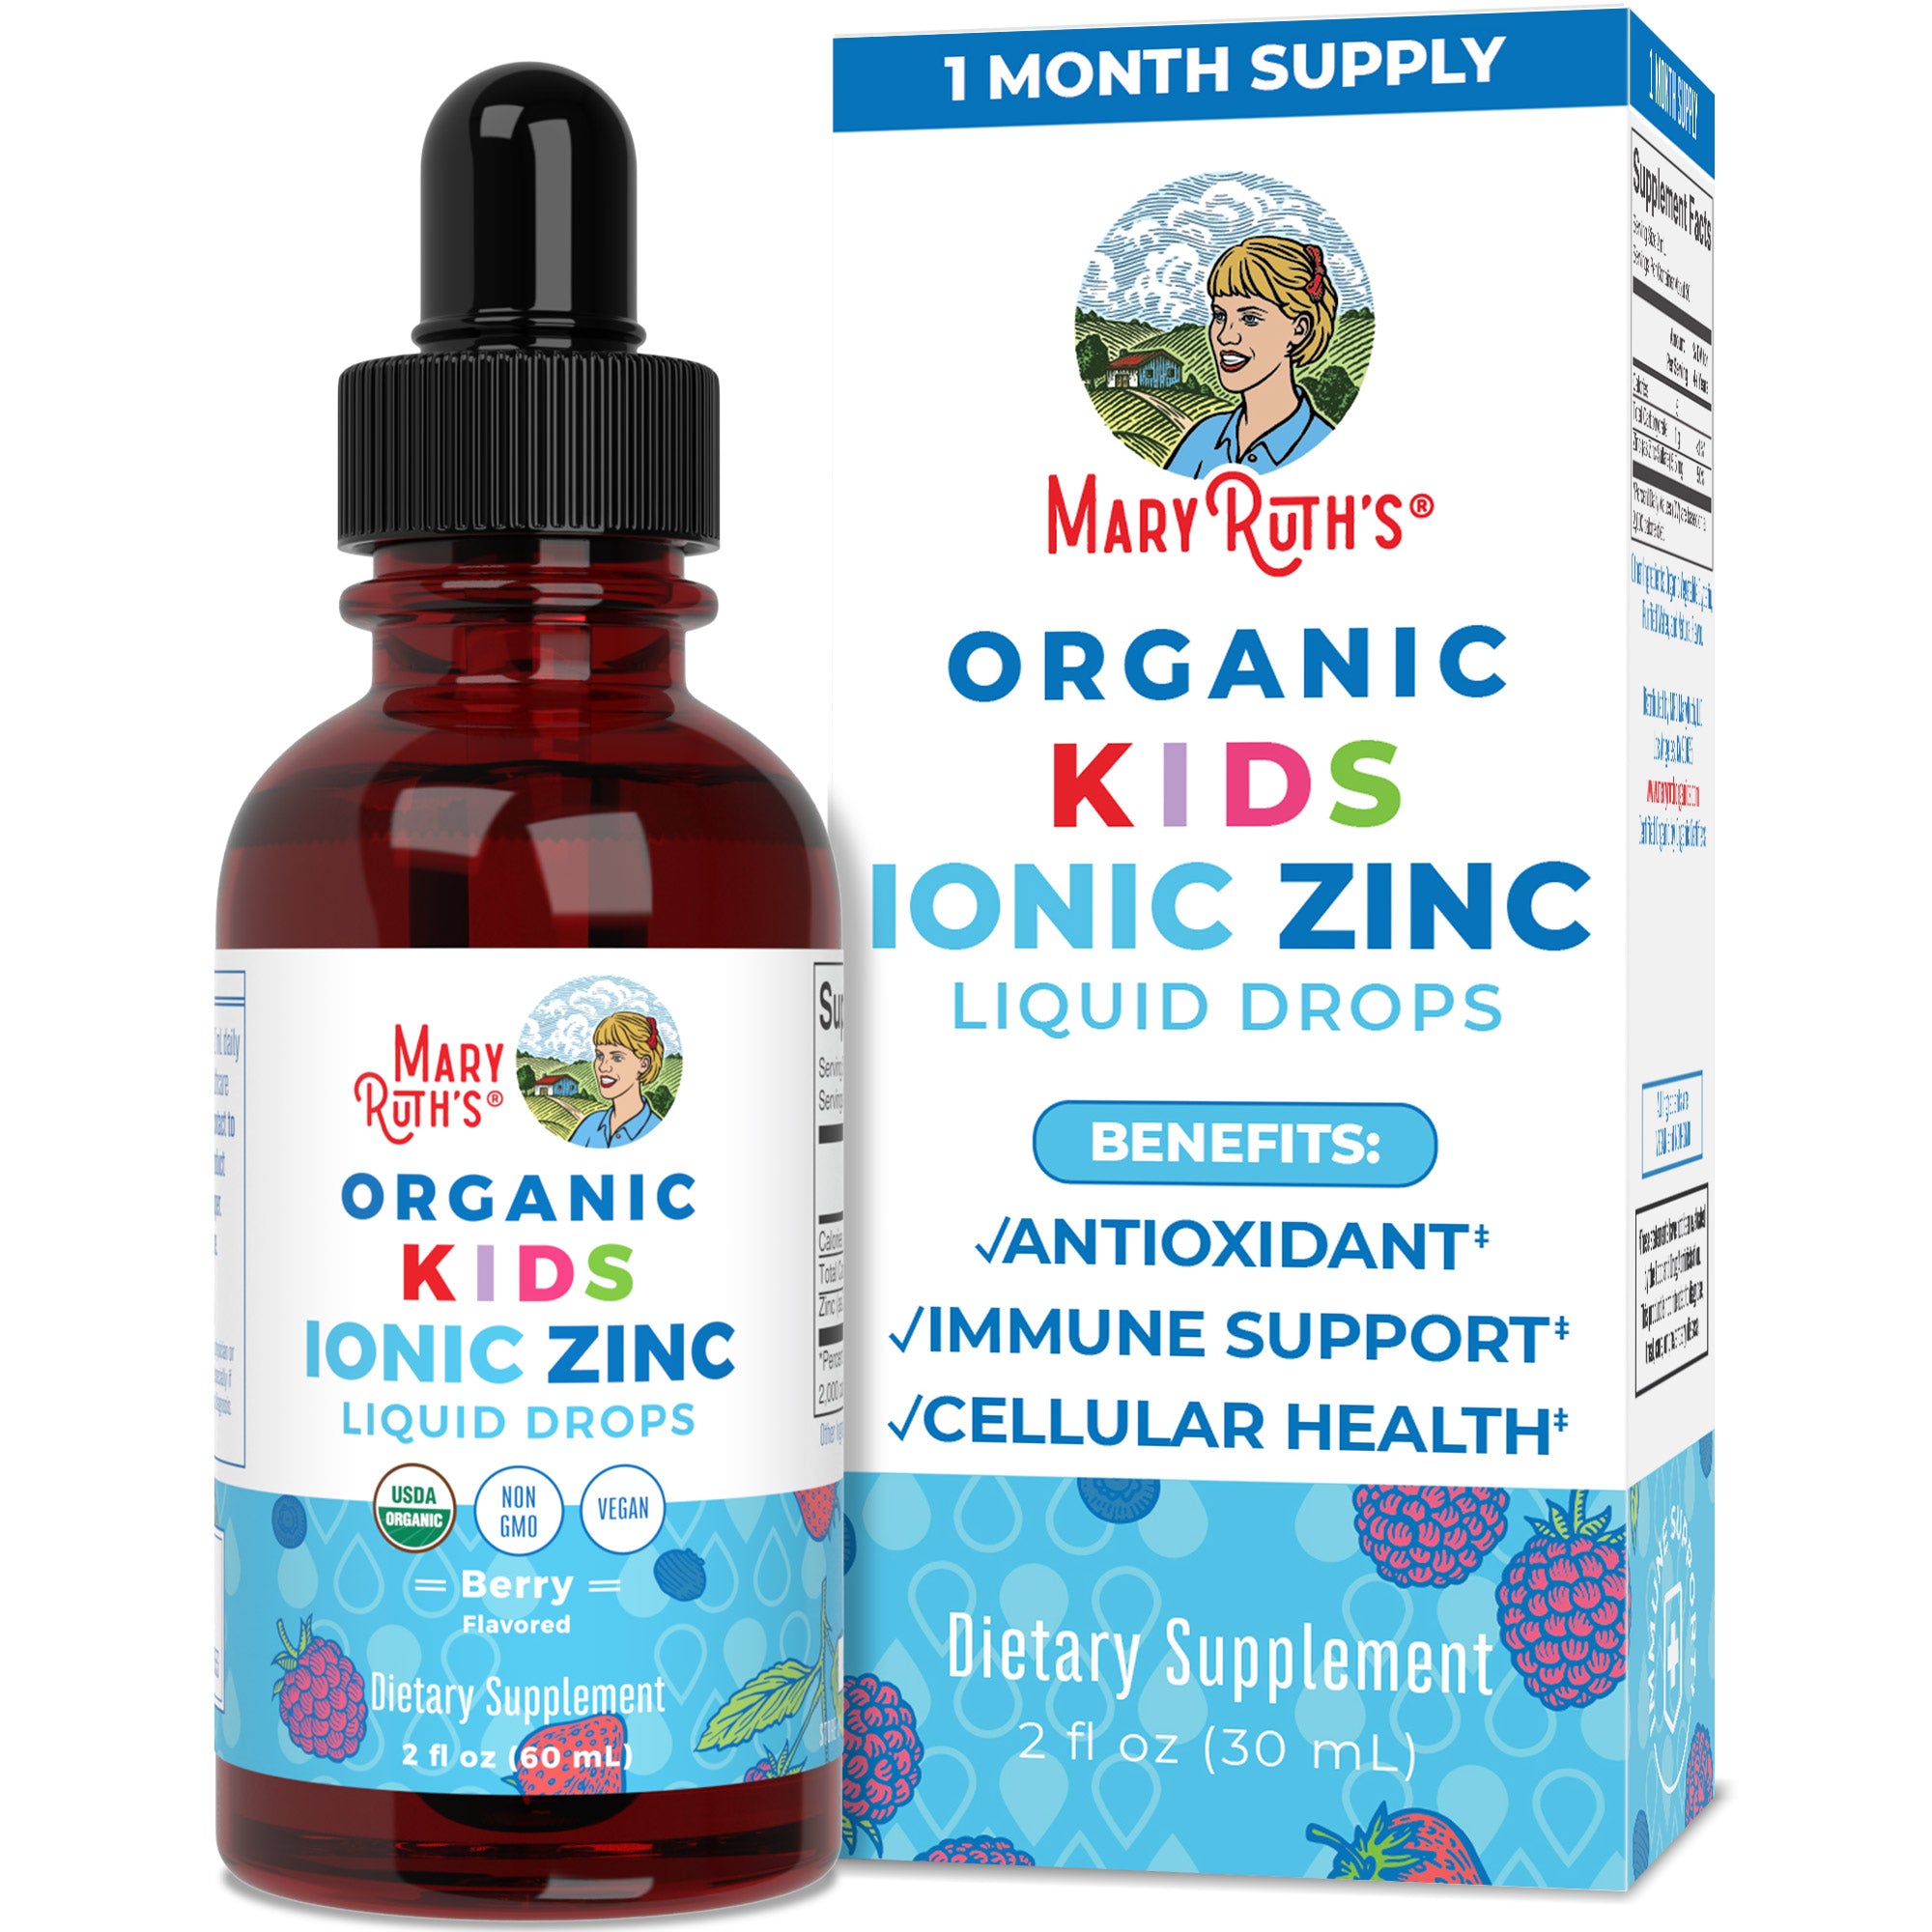 Organic Kids Ionic Zinc Liquid Drops